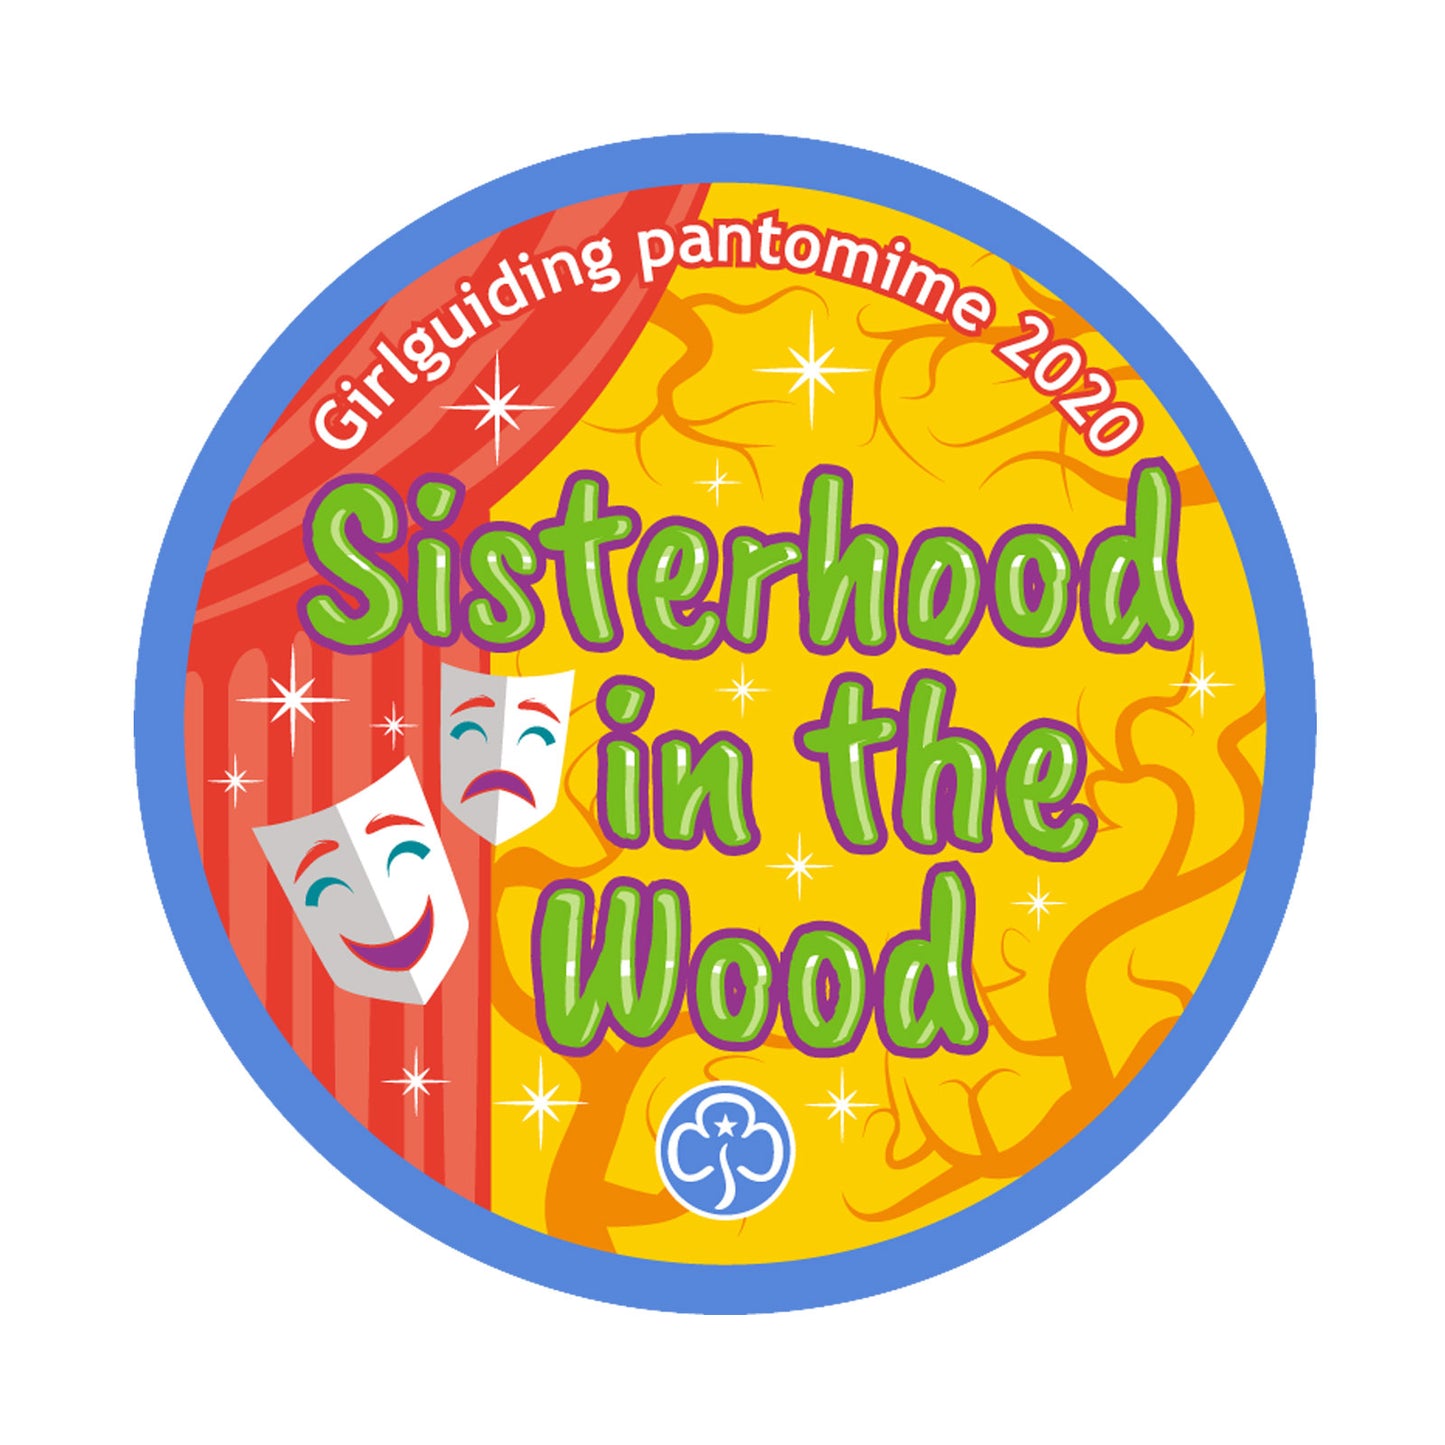 Sisterhood in the Wood Woven Badge